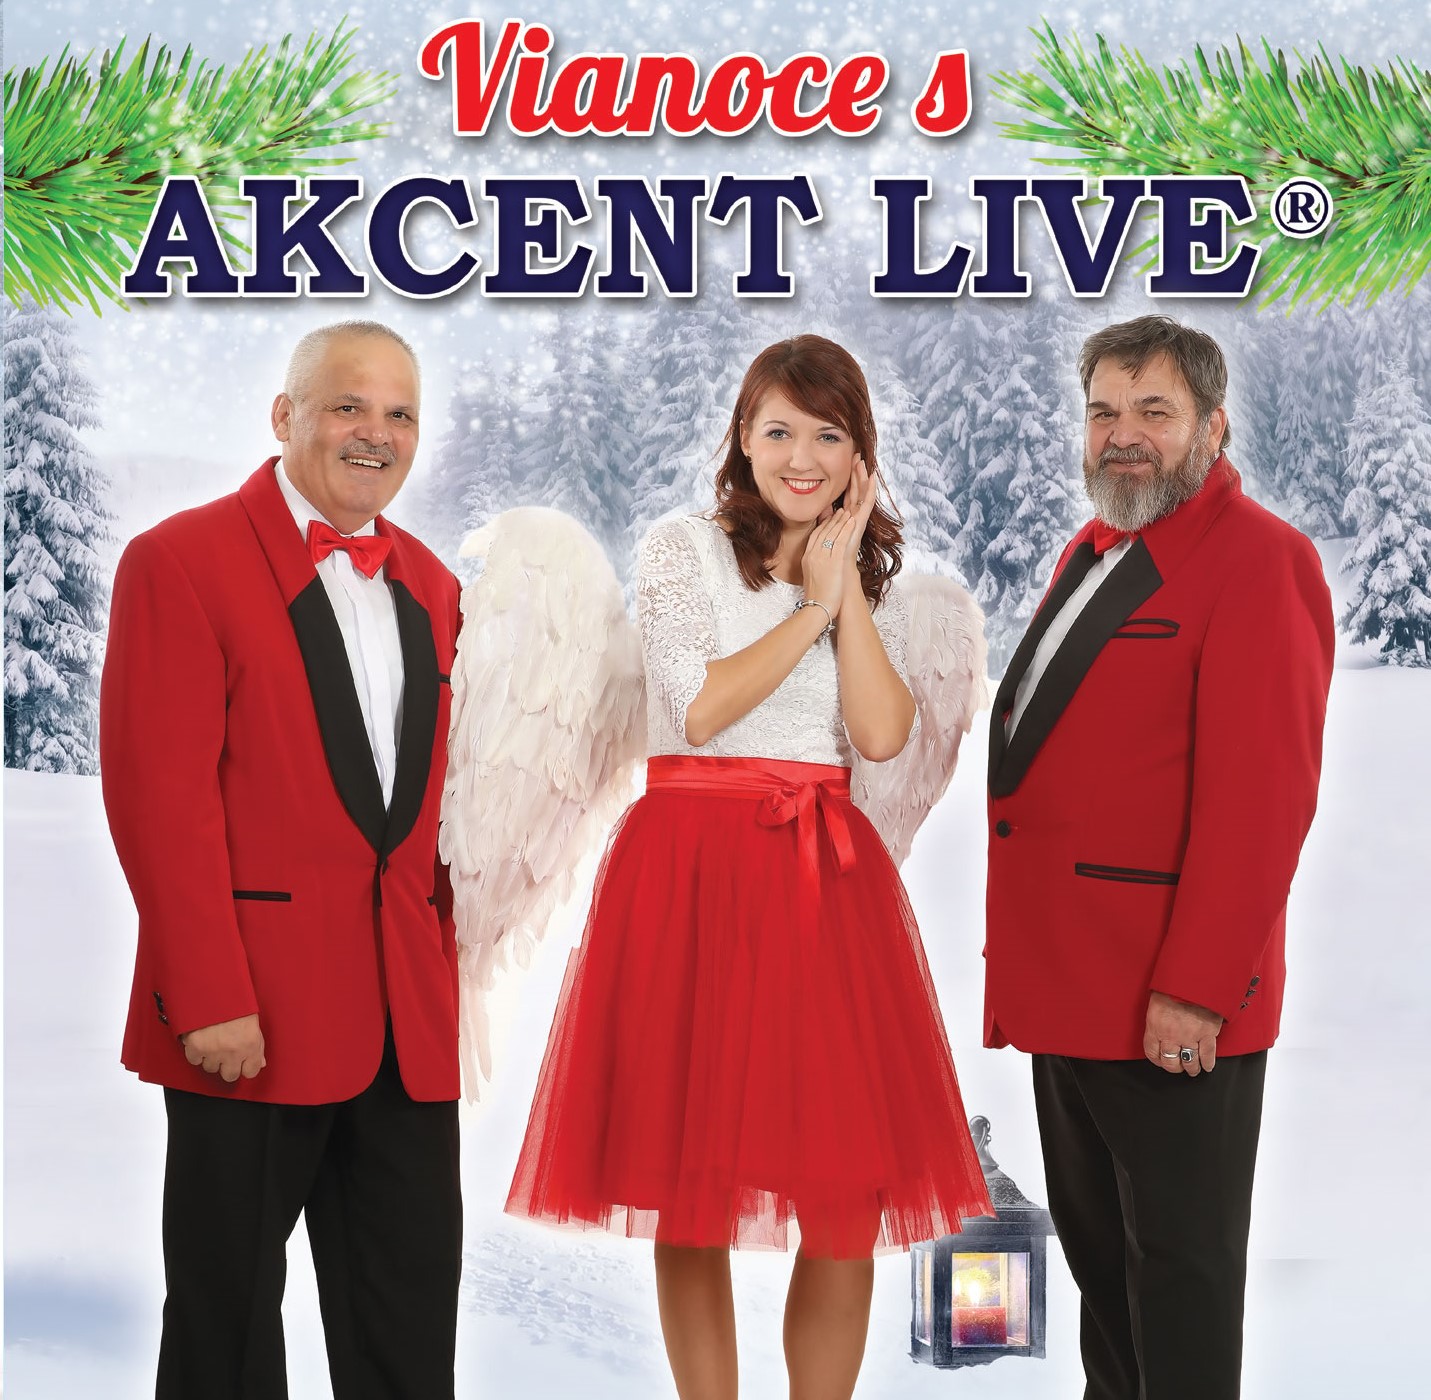 Akcent Live - Vianoce s Akcent Live (cd)